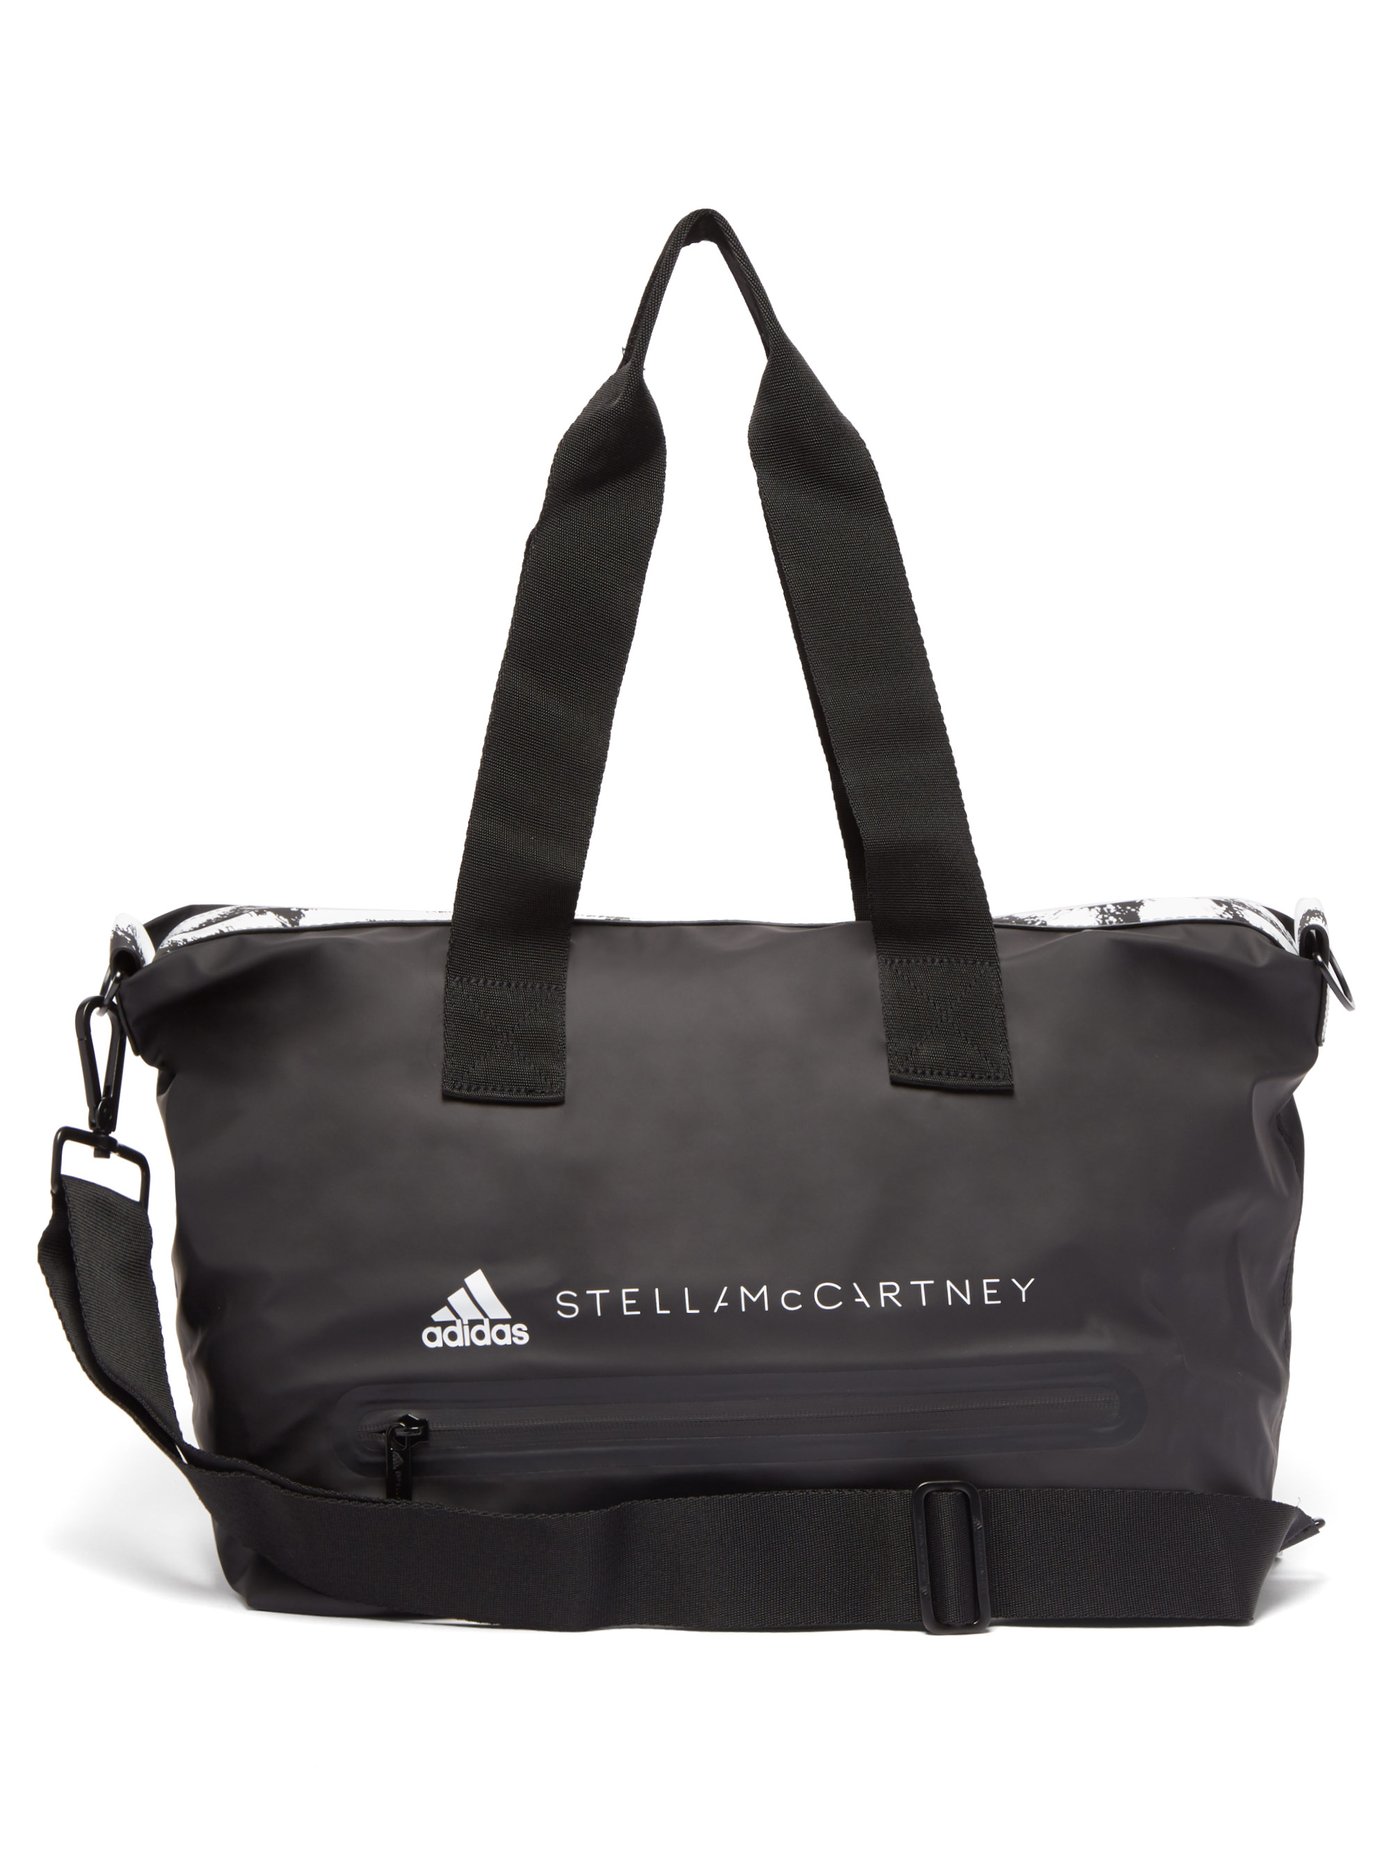 adidas by stella mccartney studio bag tote